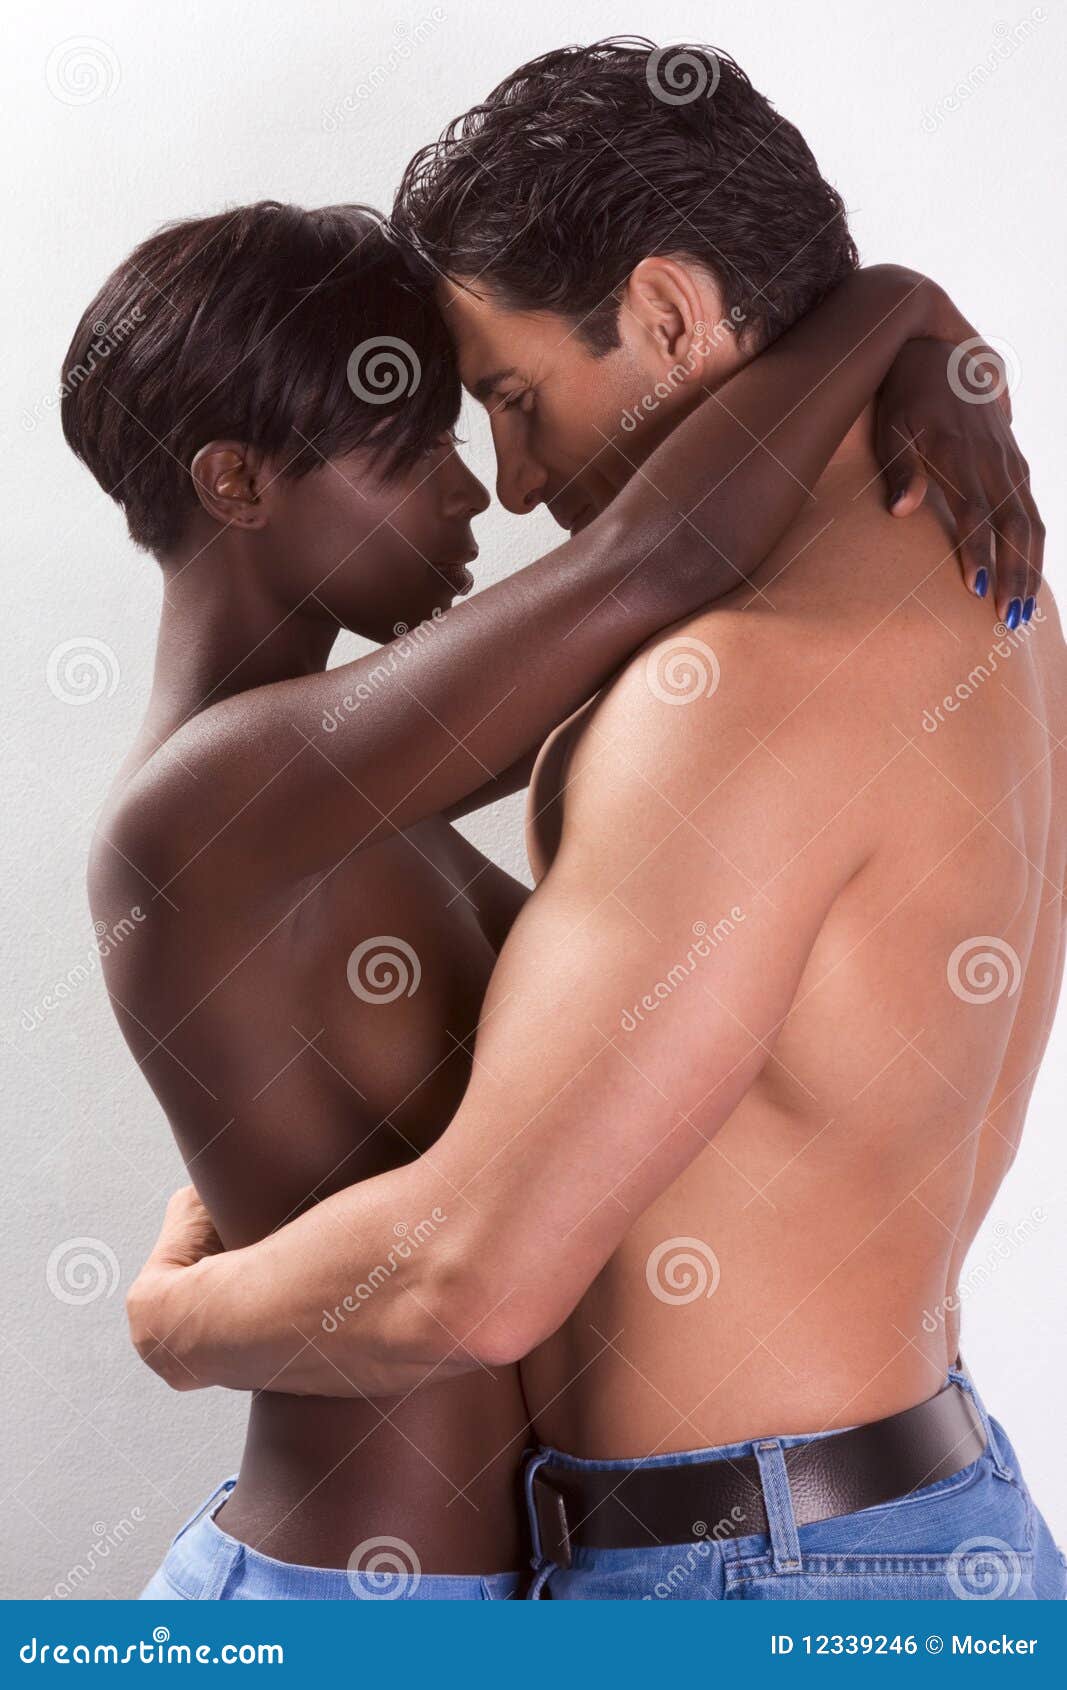 Best of Naked women with black men